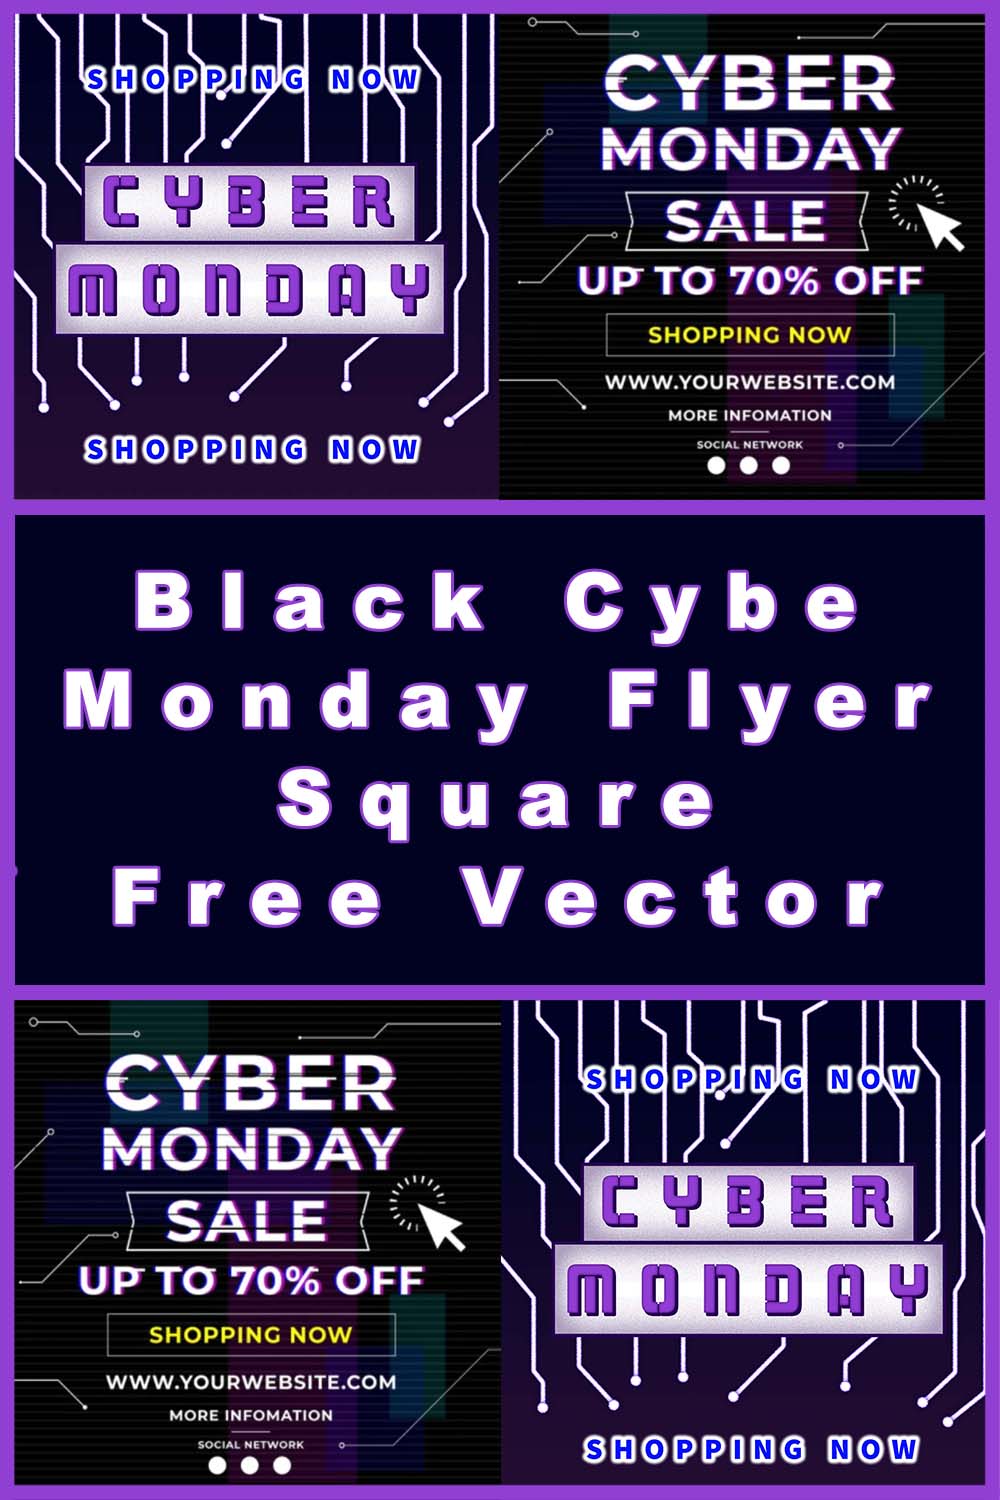 Black Cyber Monday Flyer Square Free Vector pinterest.